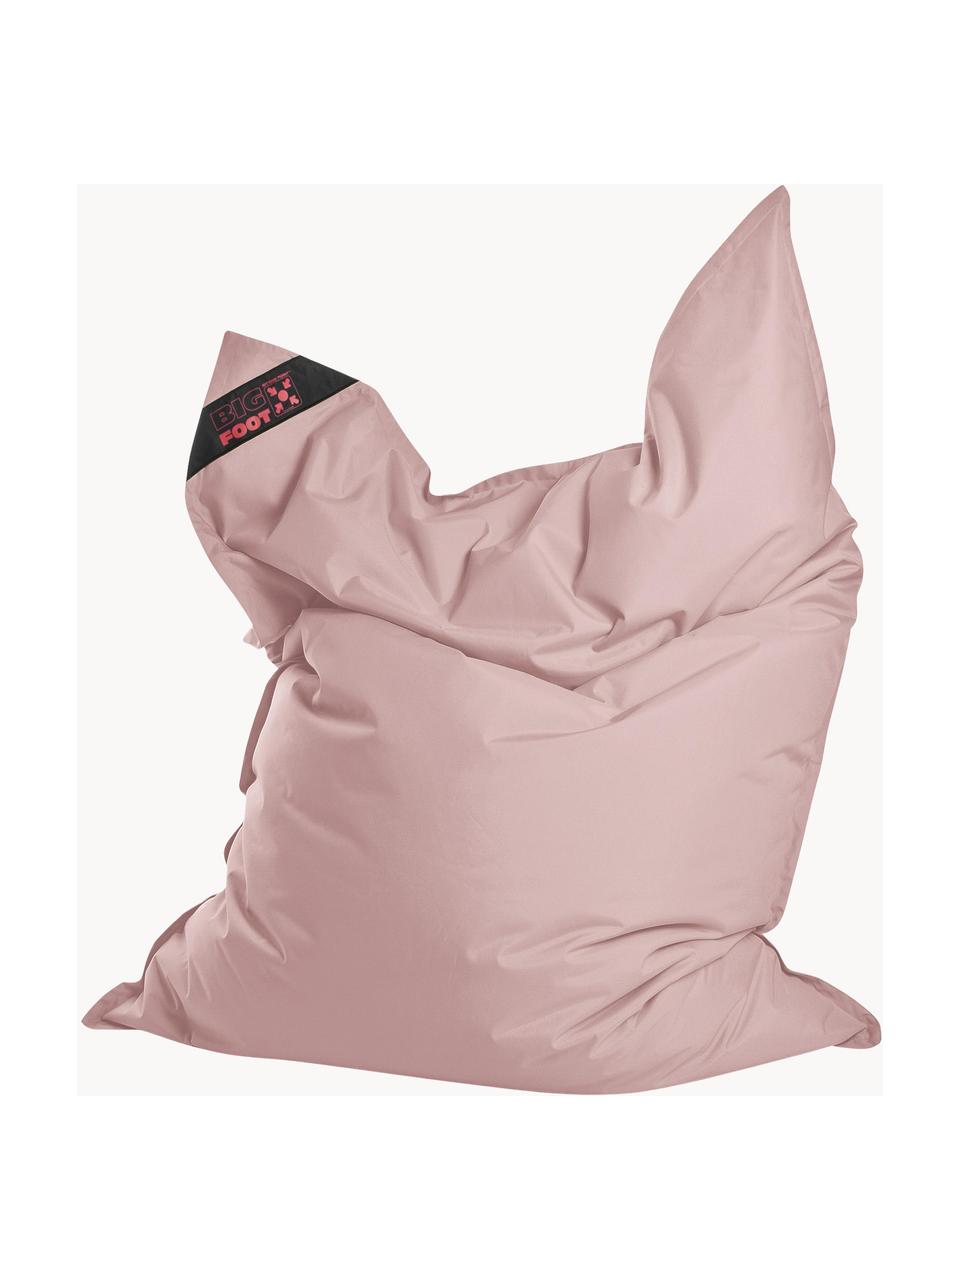 Pouf sacco grande Scuba, Rivestimento: 100% polipropilene resist, Rosa chiaro, Larg. 130 x Alt. 170 cm